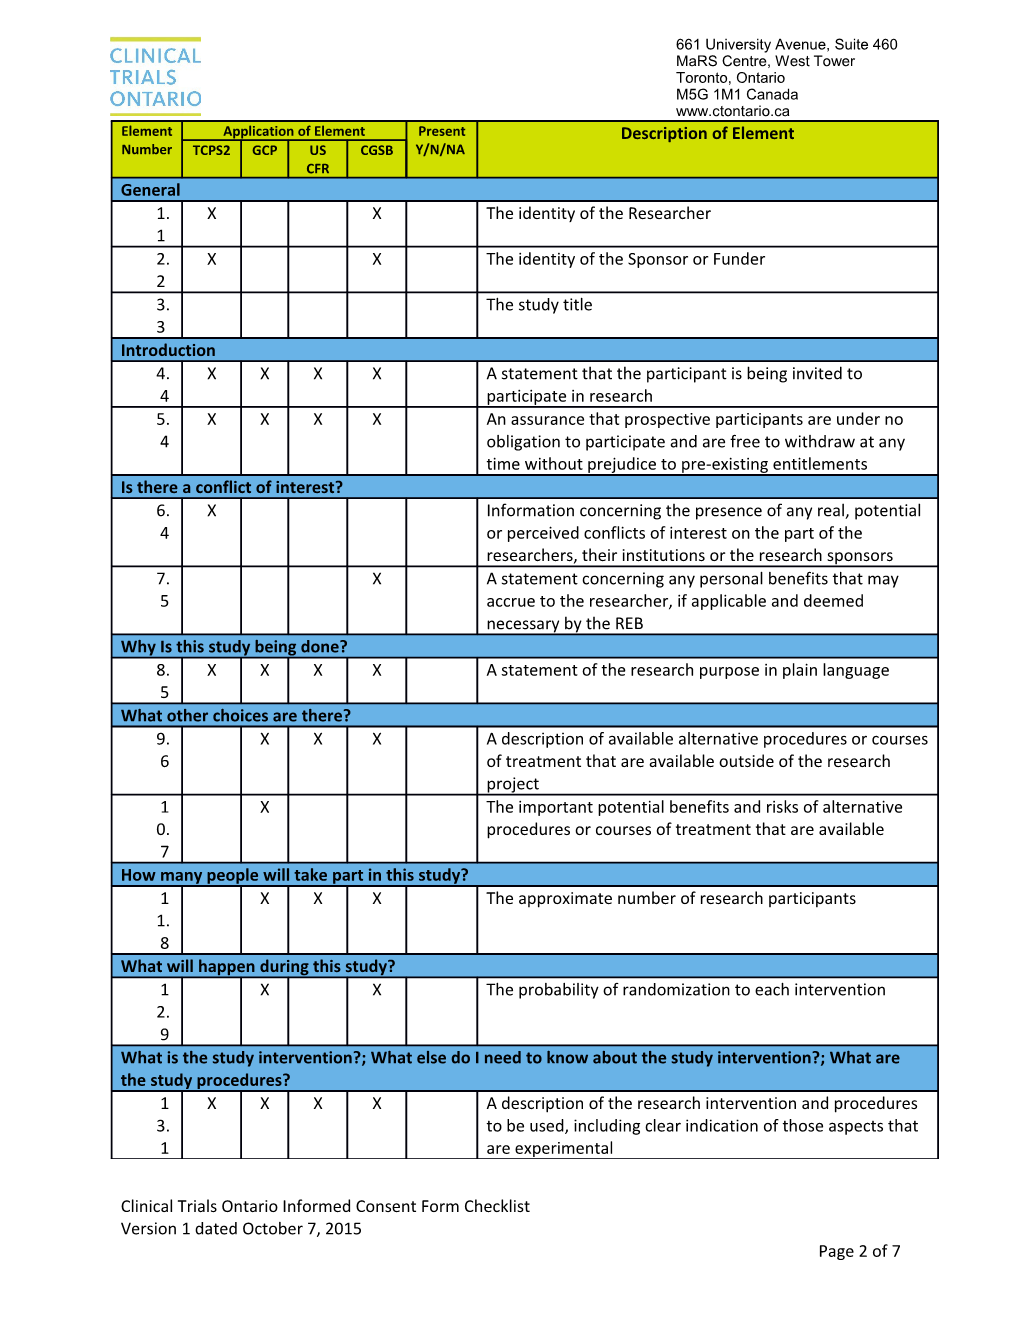 Informed Consent Form (ICF) Checklist